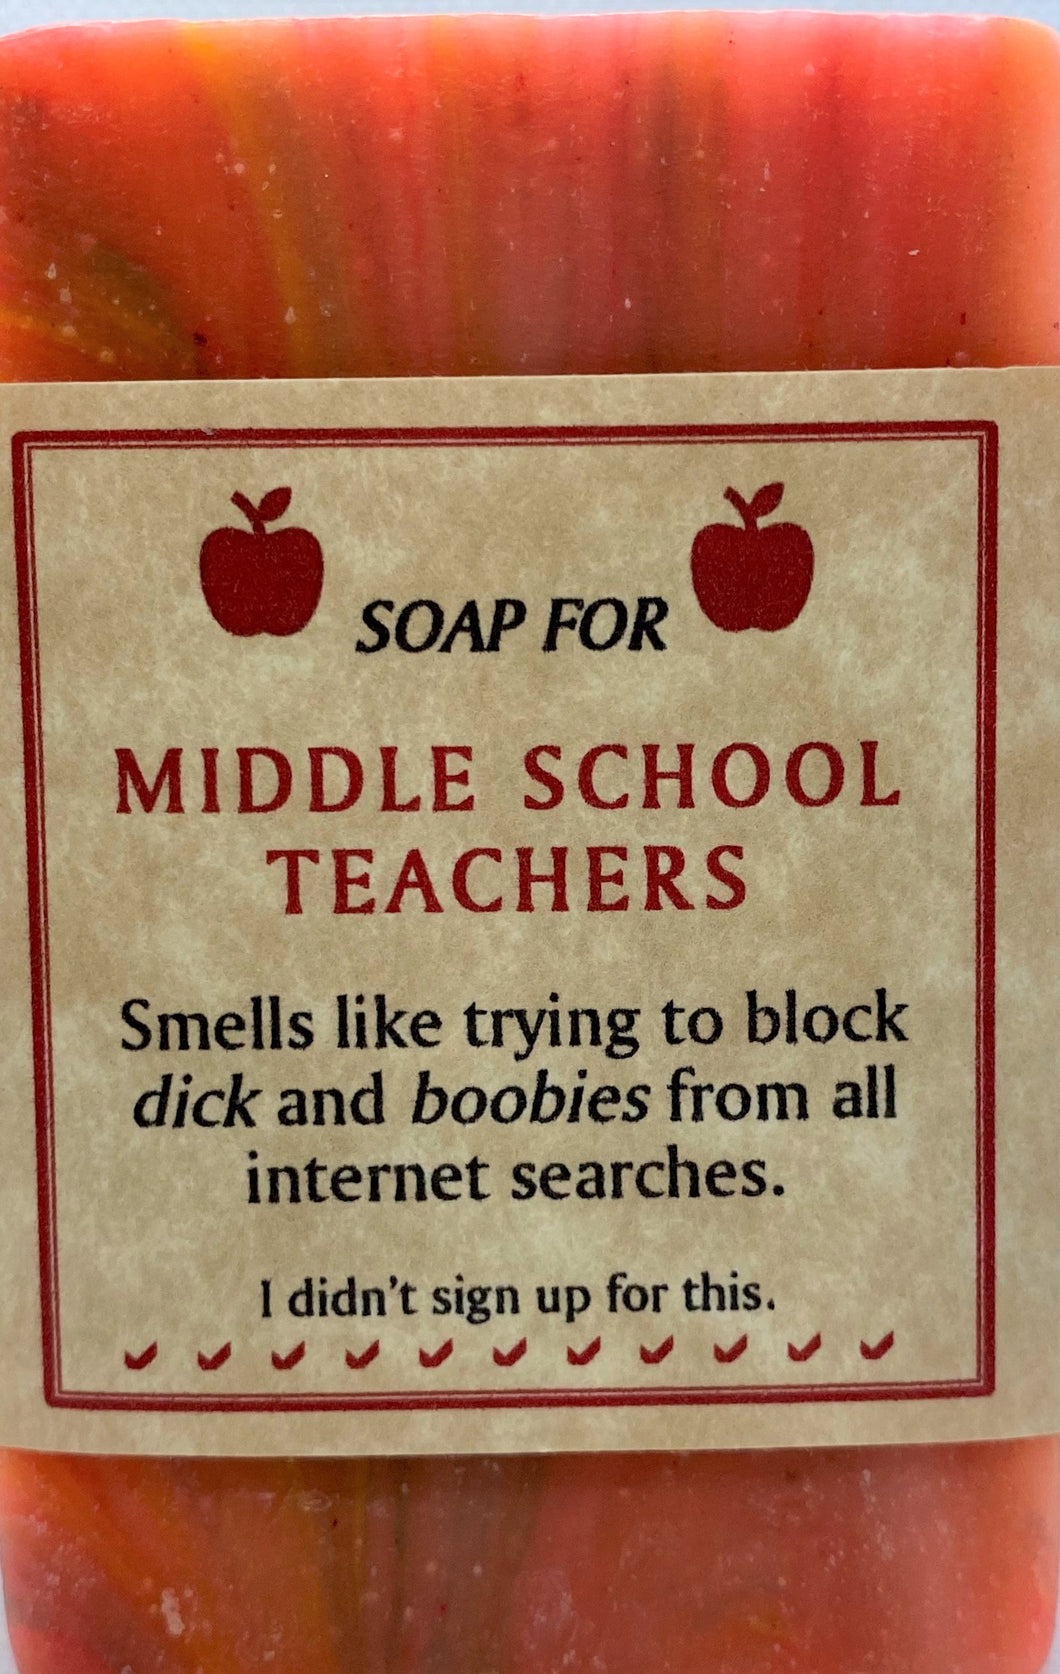 Middle School Teachers